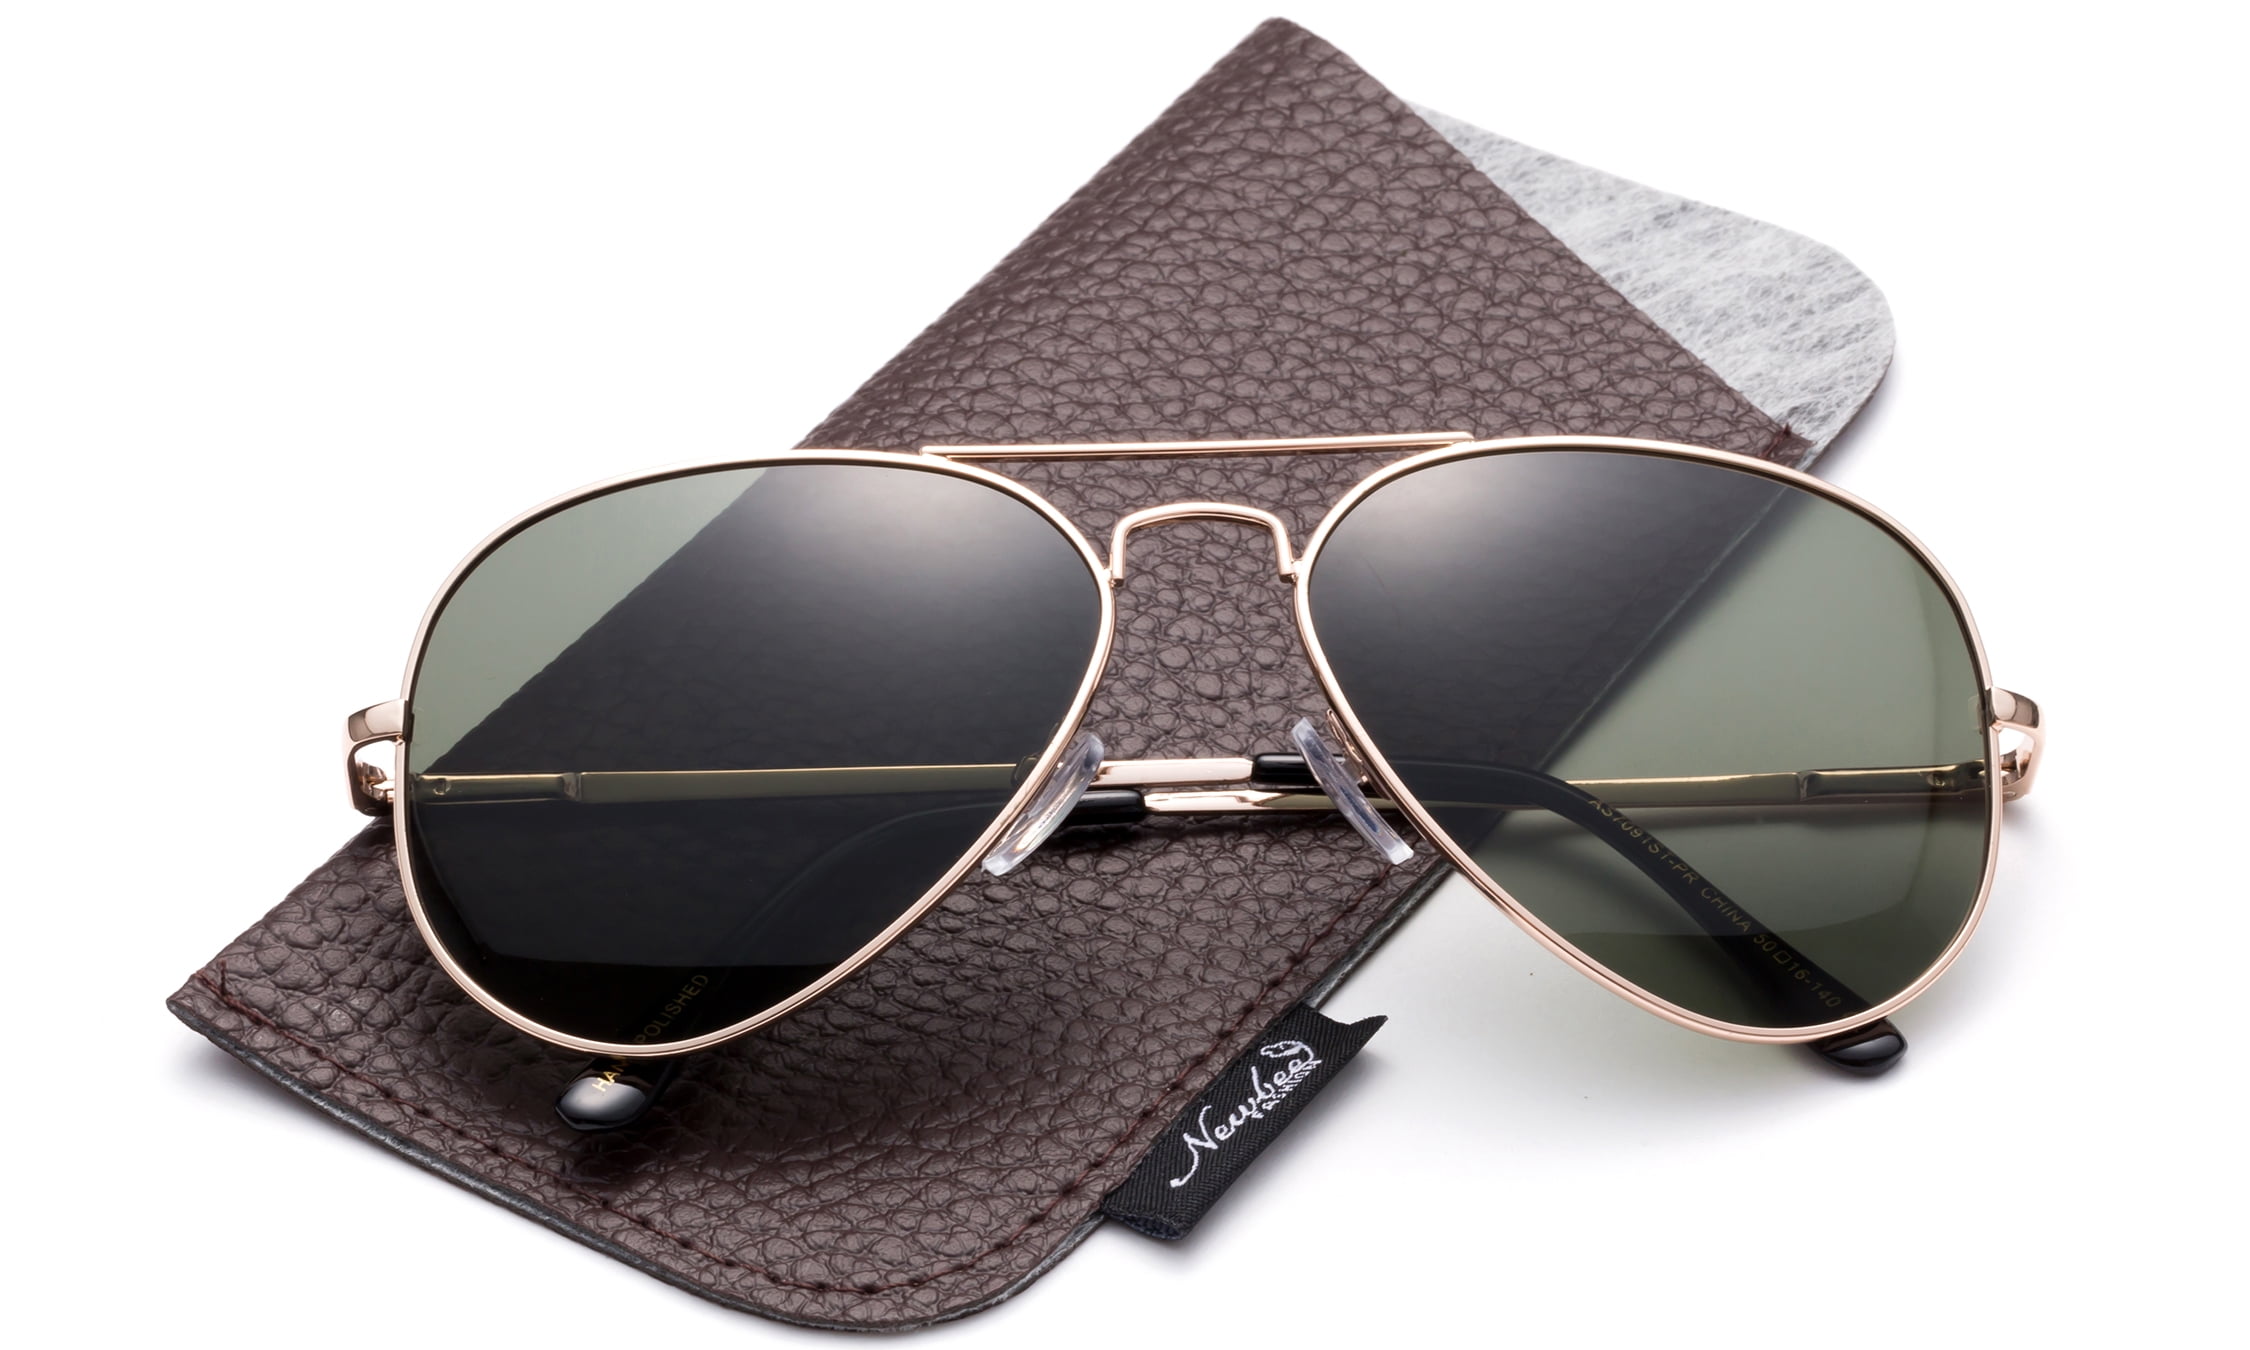 Newbee Fashion - Polarized Aviator Sunglasses Mirrored Lens Classic ...